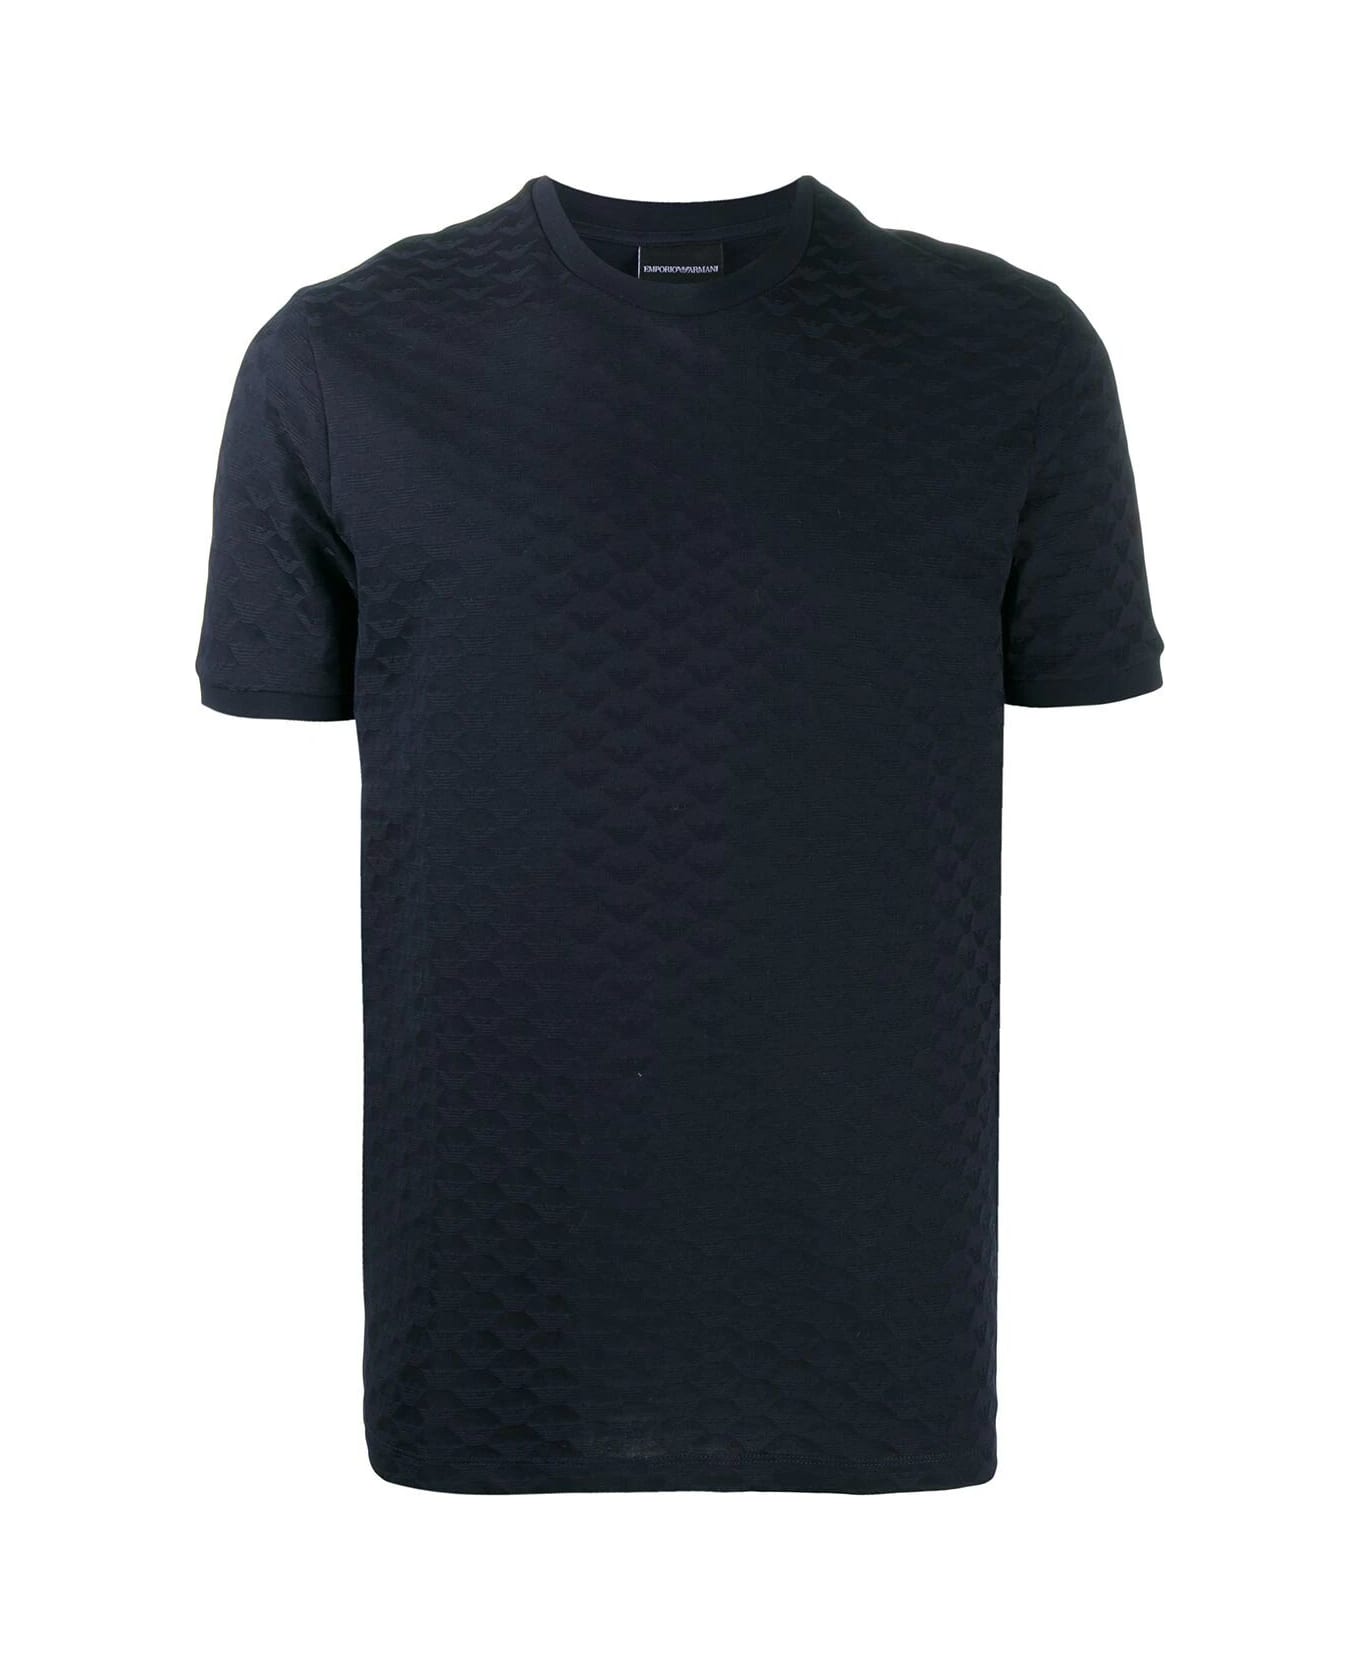 Emporio Armani T-shirt - Navy Blue